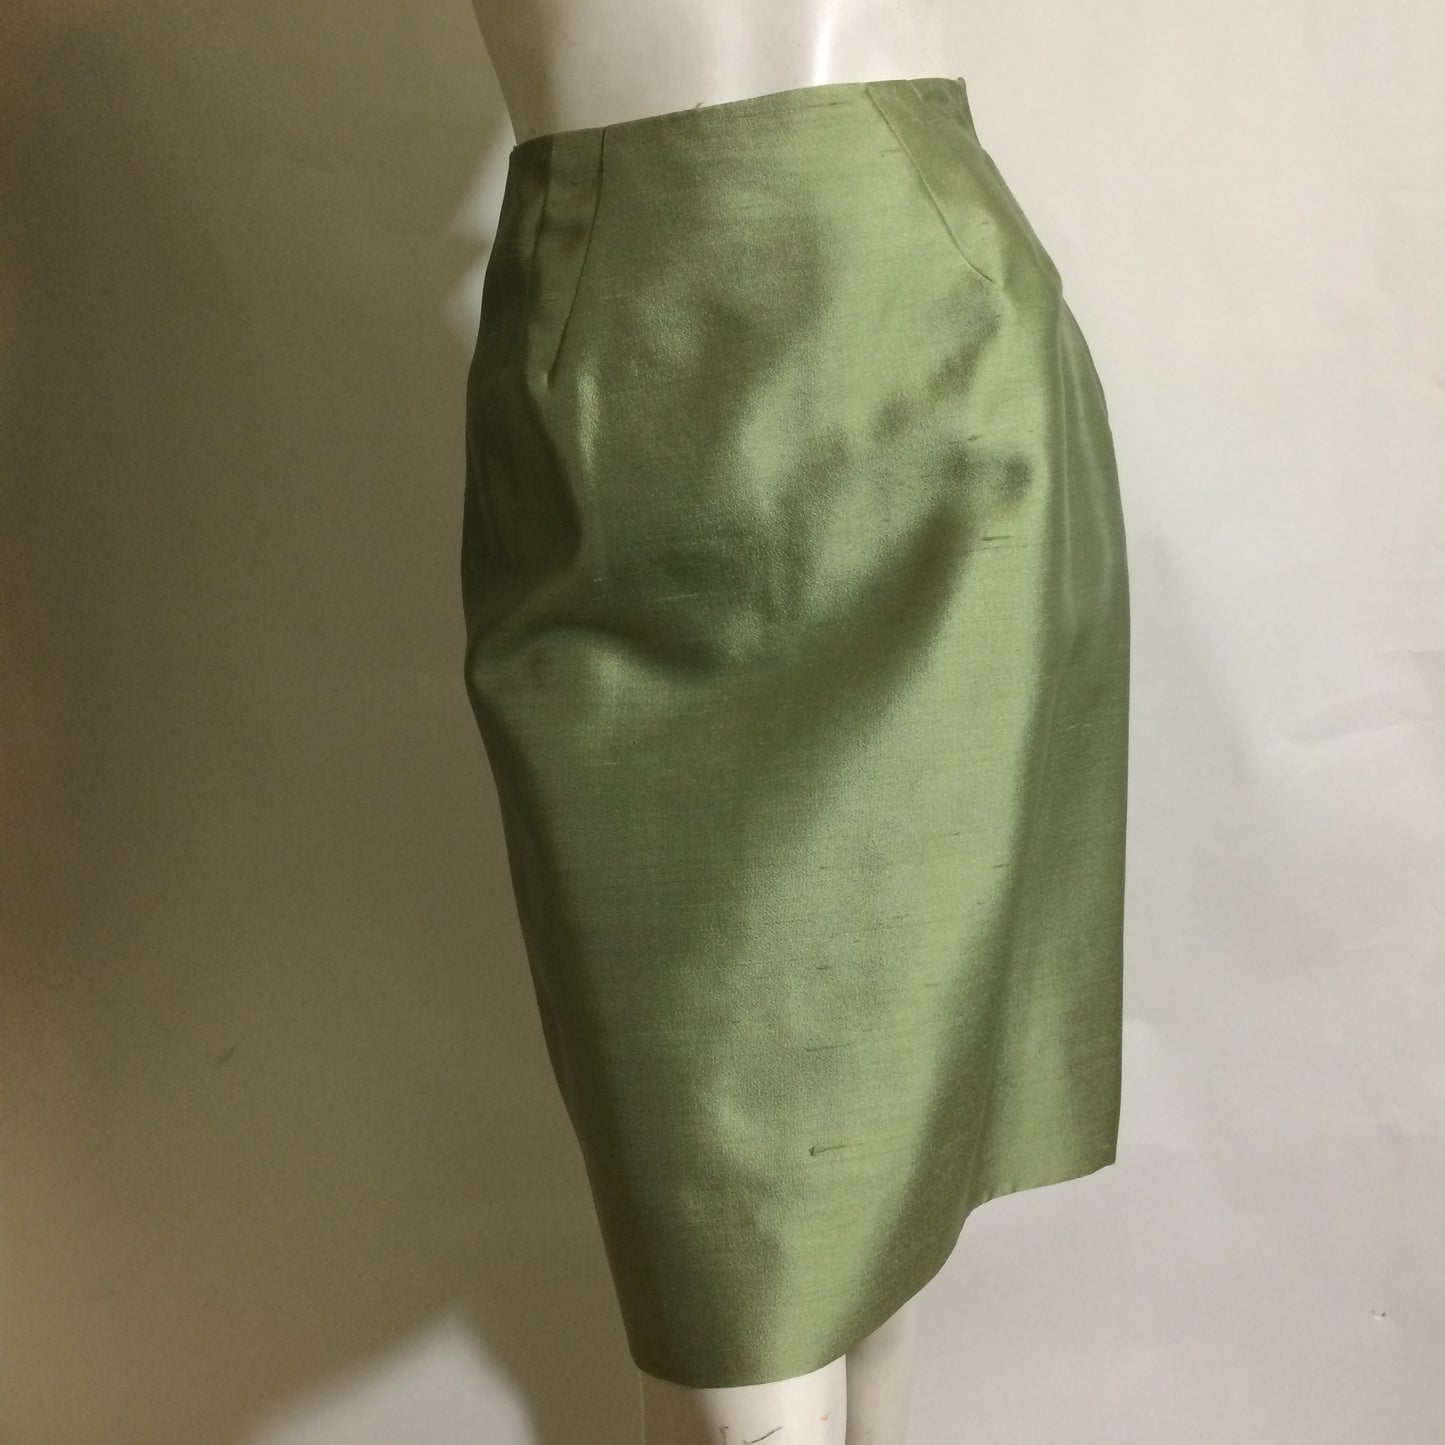 Celadon Green Silk Jackie Style Suit circa 1960s